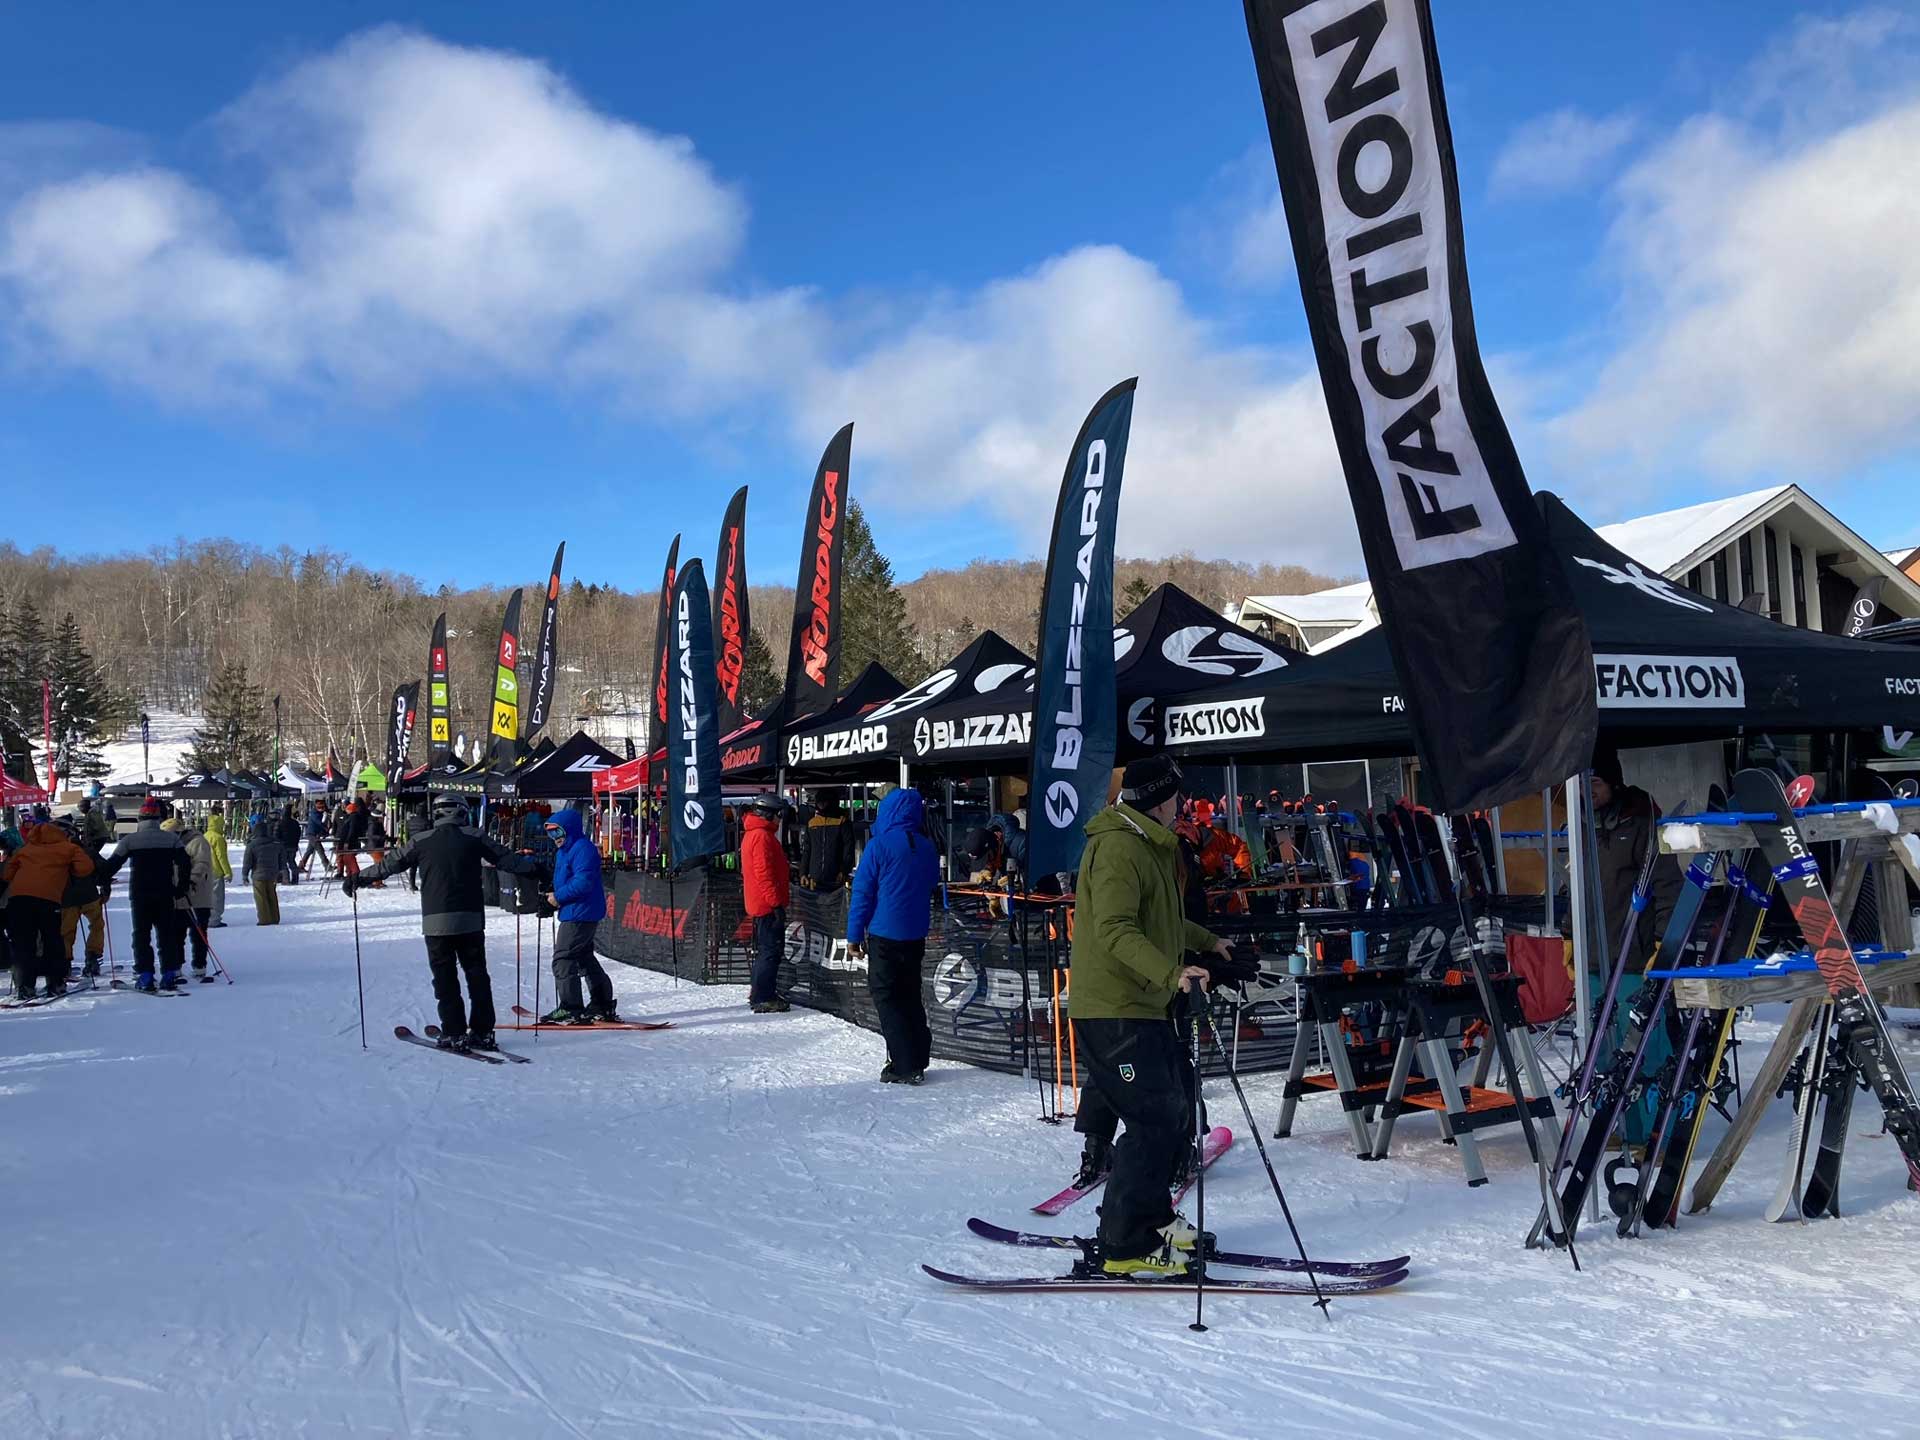 Row of ski and snowboarding exhibitors